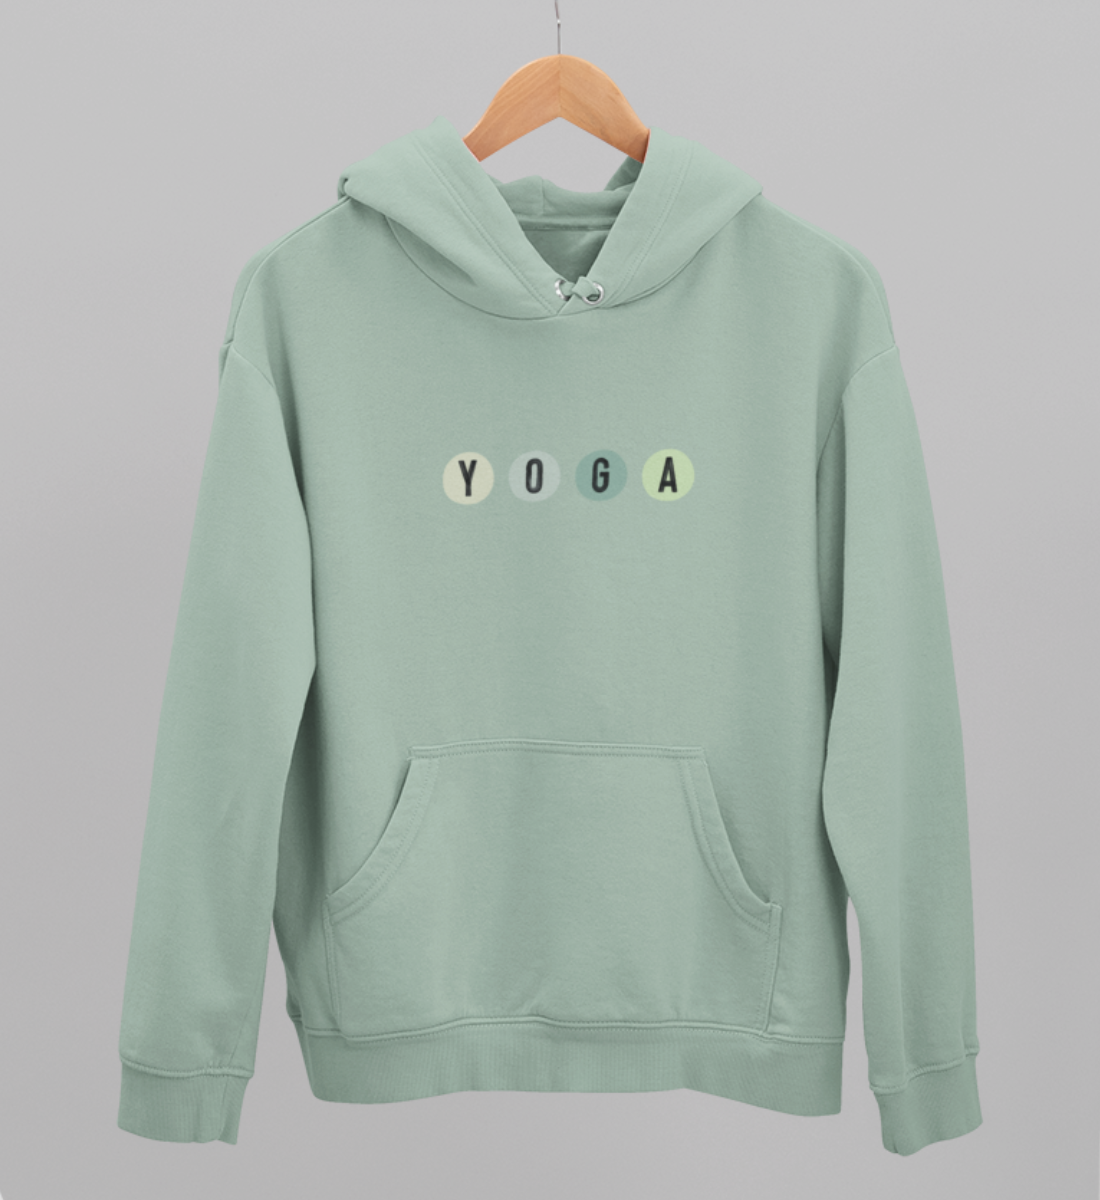 yoga l bio hoodie l yoga bekleidung mintgrün l umweltfreundliche kleidung l bewusst leben dank veganer mode